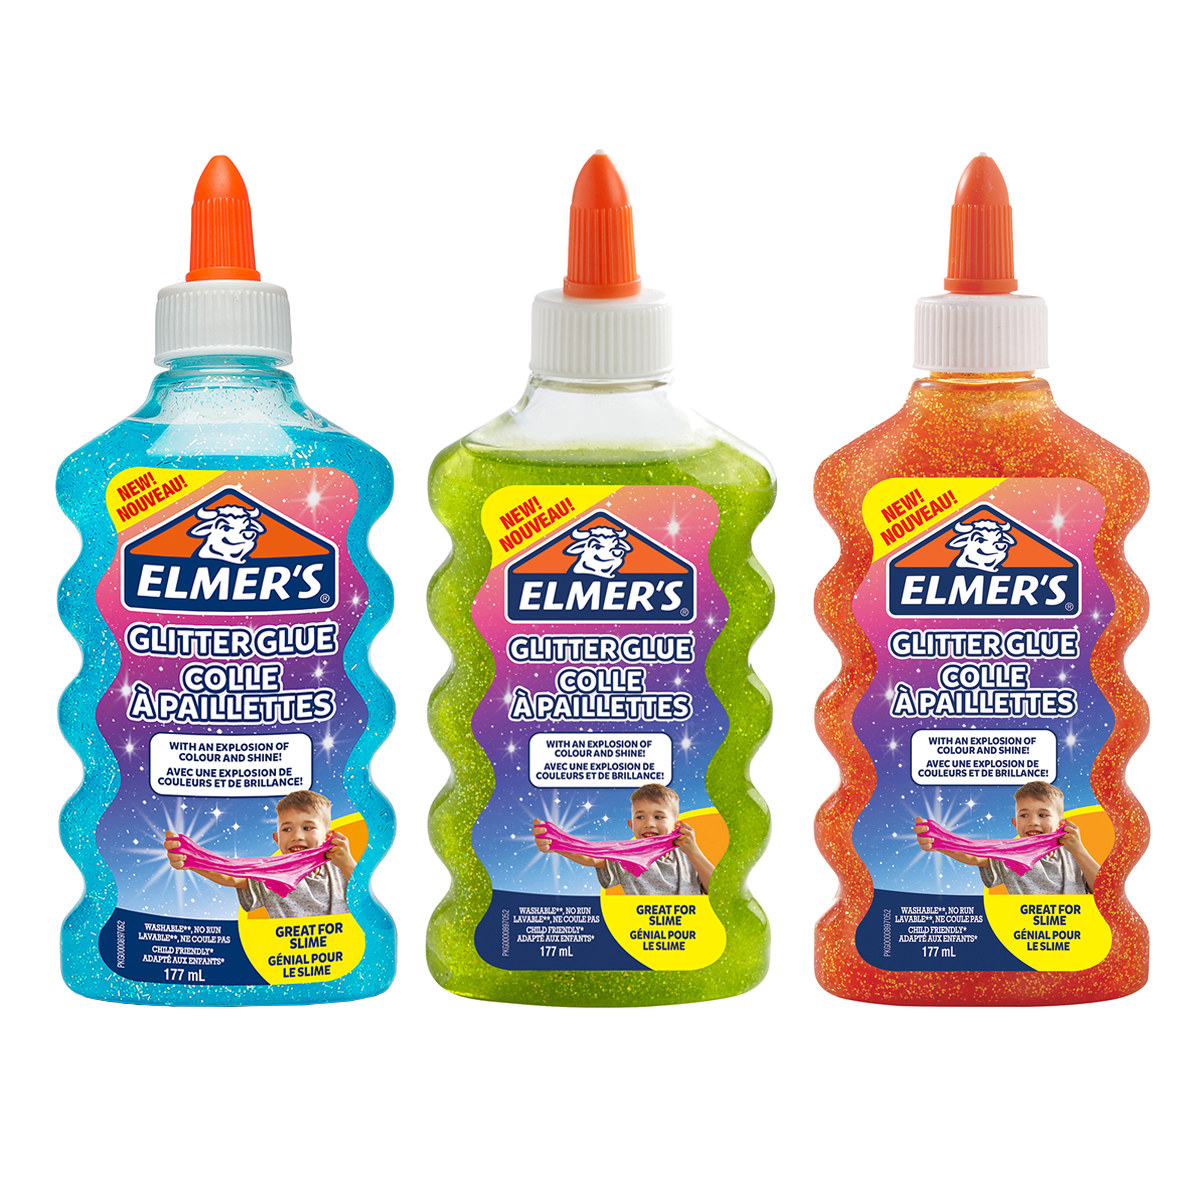  Elmer's Transparent Slime Kit : Learning: Supplies